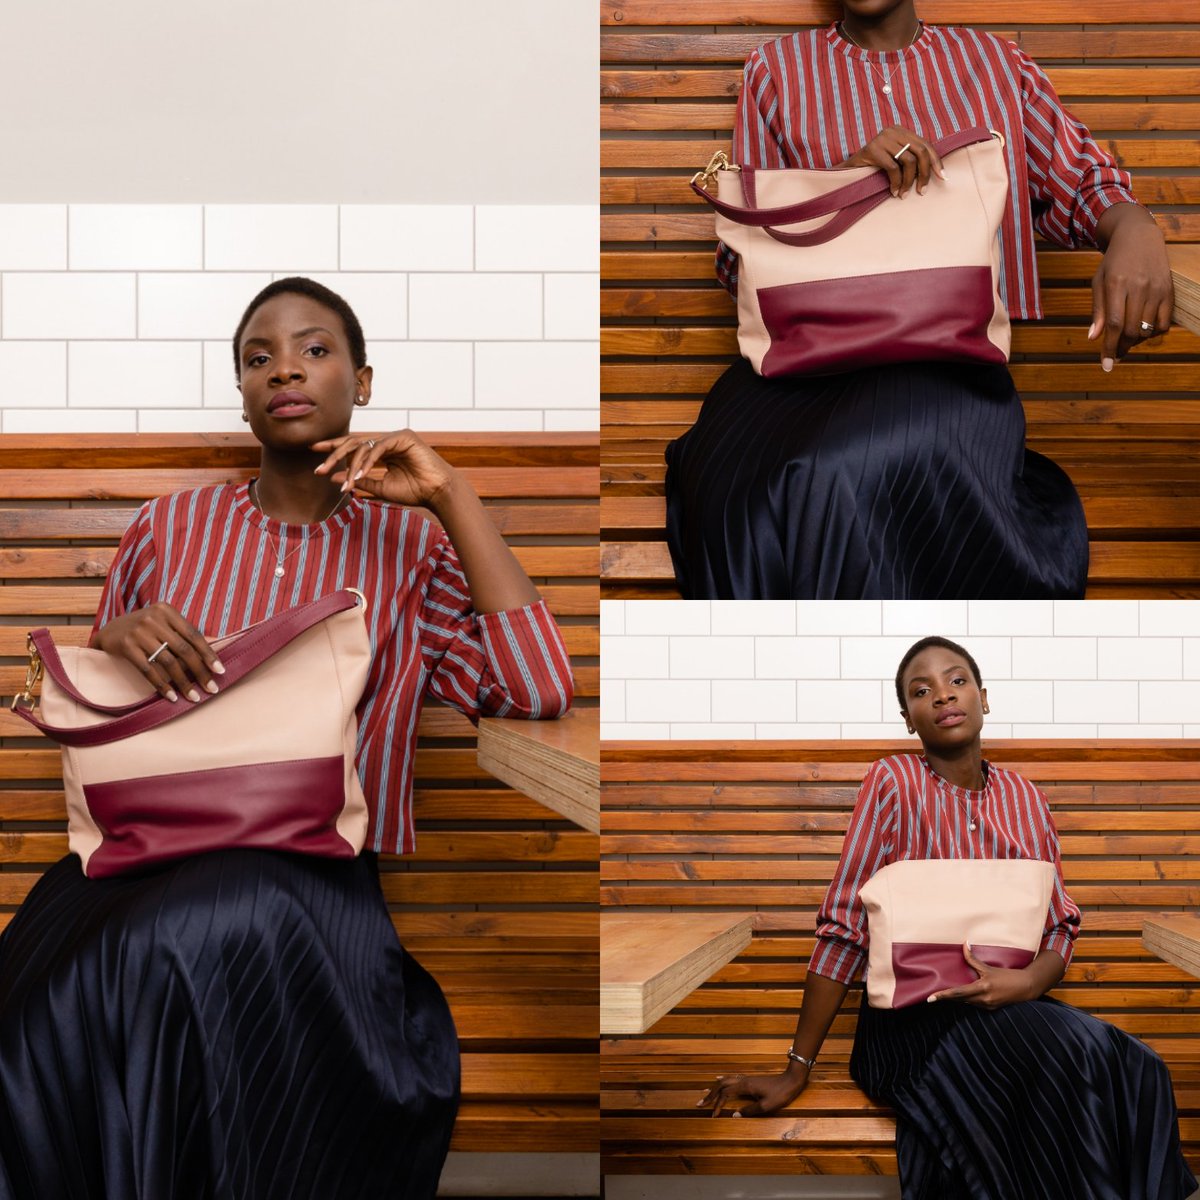 Some of my photography for Luxury Handbag designer @SarahHaranUK

#FunctionalHandbags #EthicalHandbags #LuxuryHandbags #SarahHaran #EditorialPhotography #ProductPhotography #IndependentBrand #ZenoWatson

zenowatson.com